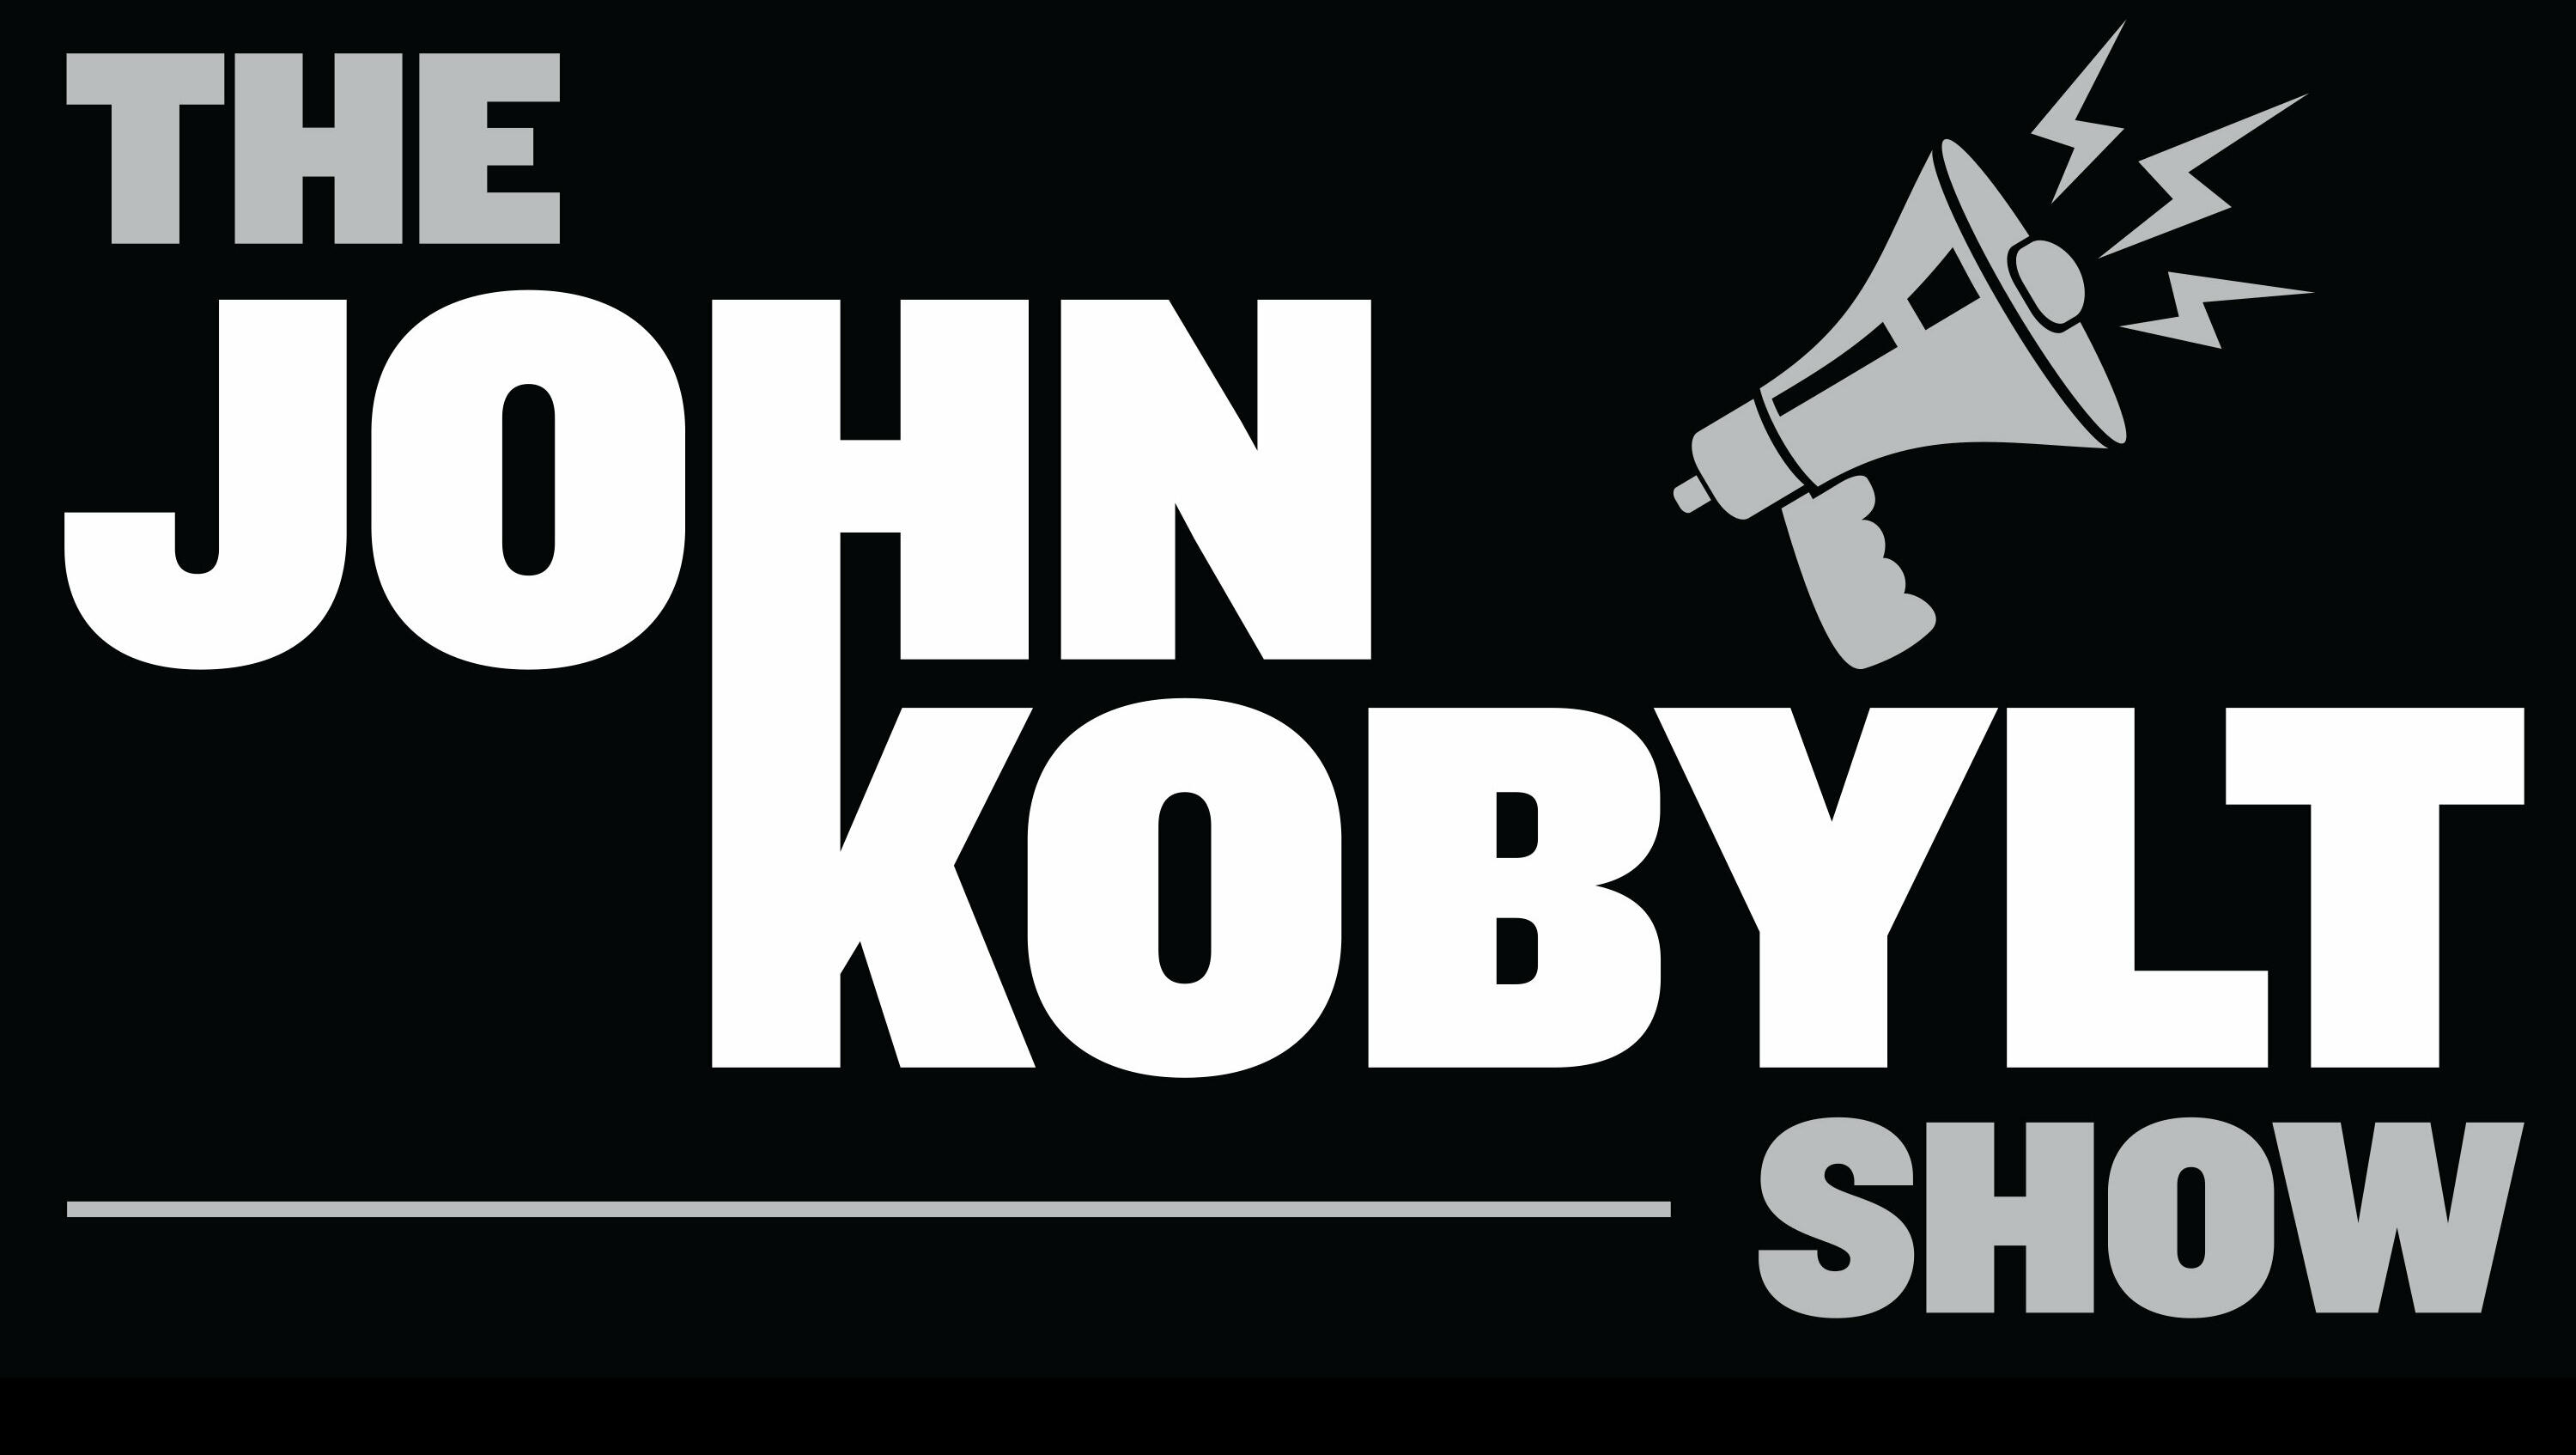 The John Kobylt Show Hour 1 (06/18) - USC Student Arrested